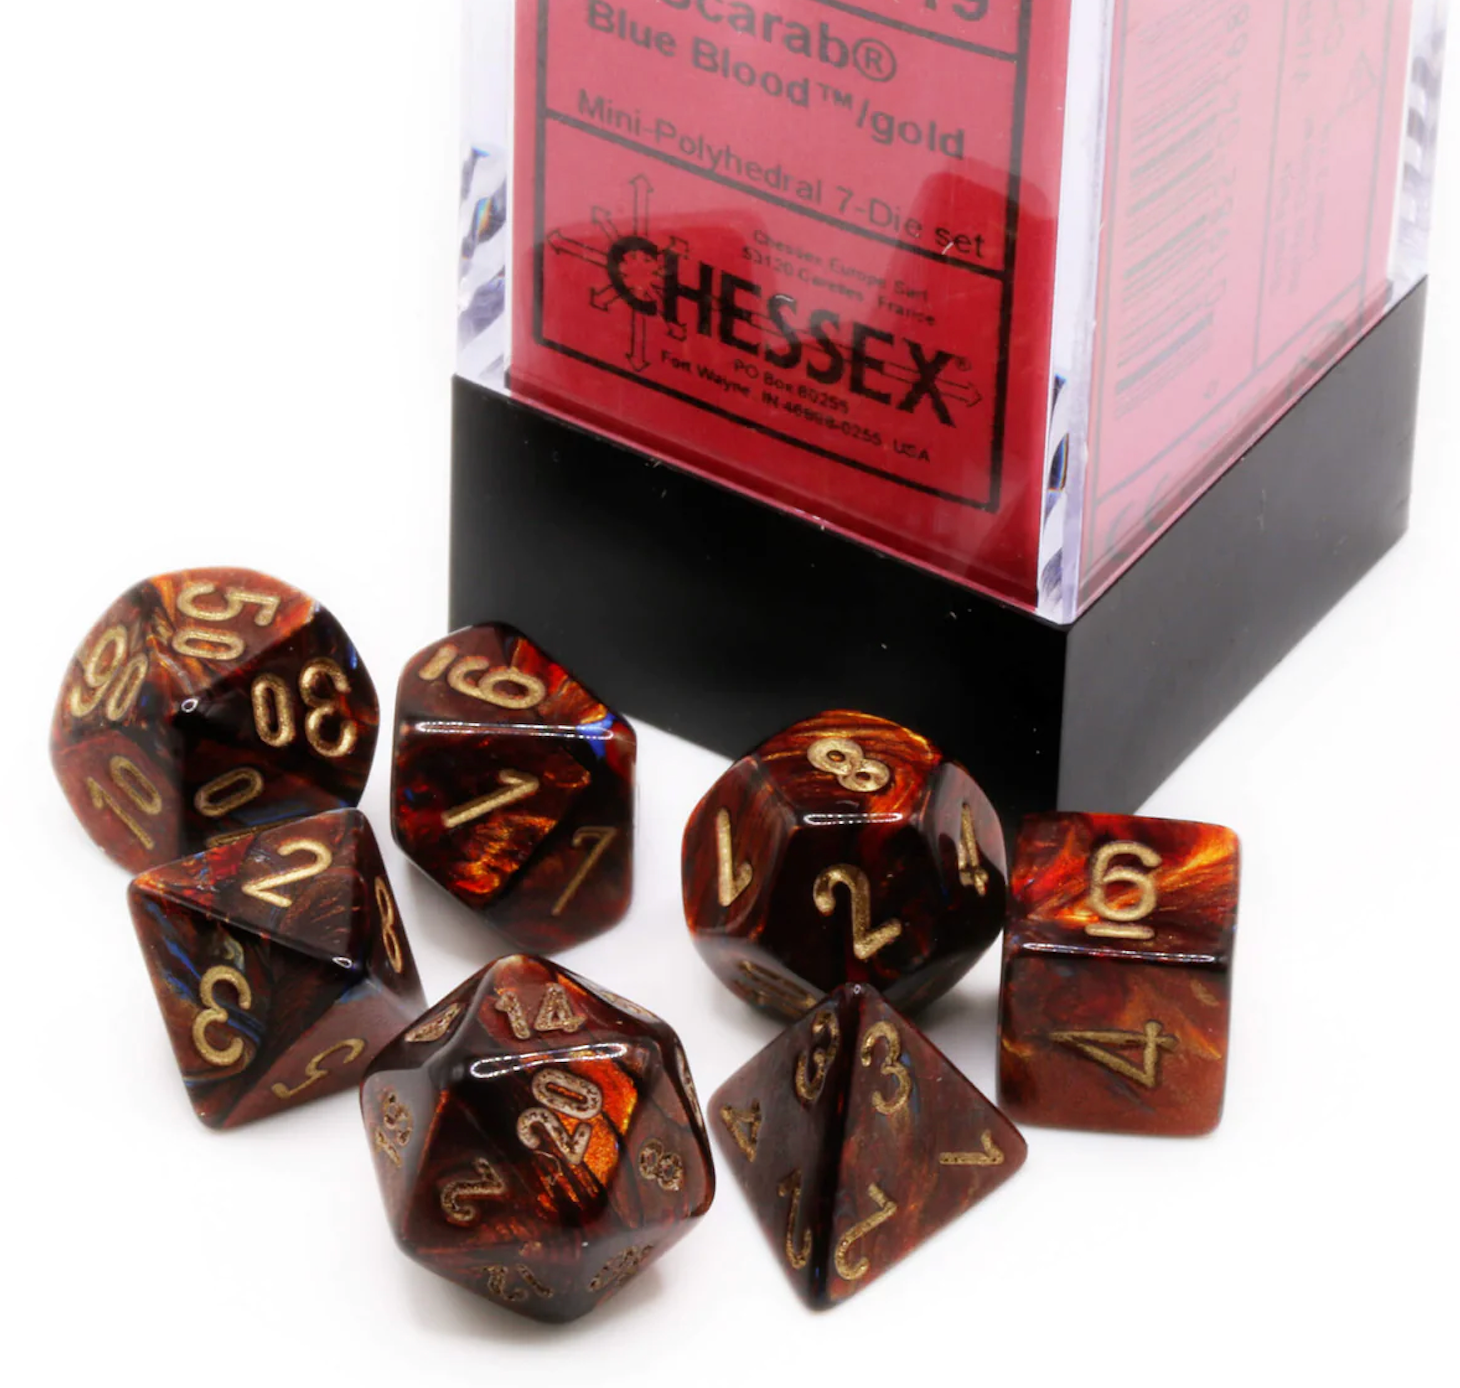 Chessex: Scarab Mini 7-Dice Set